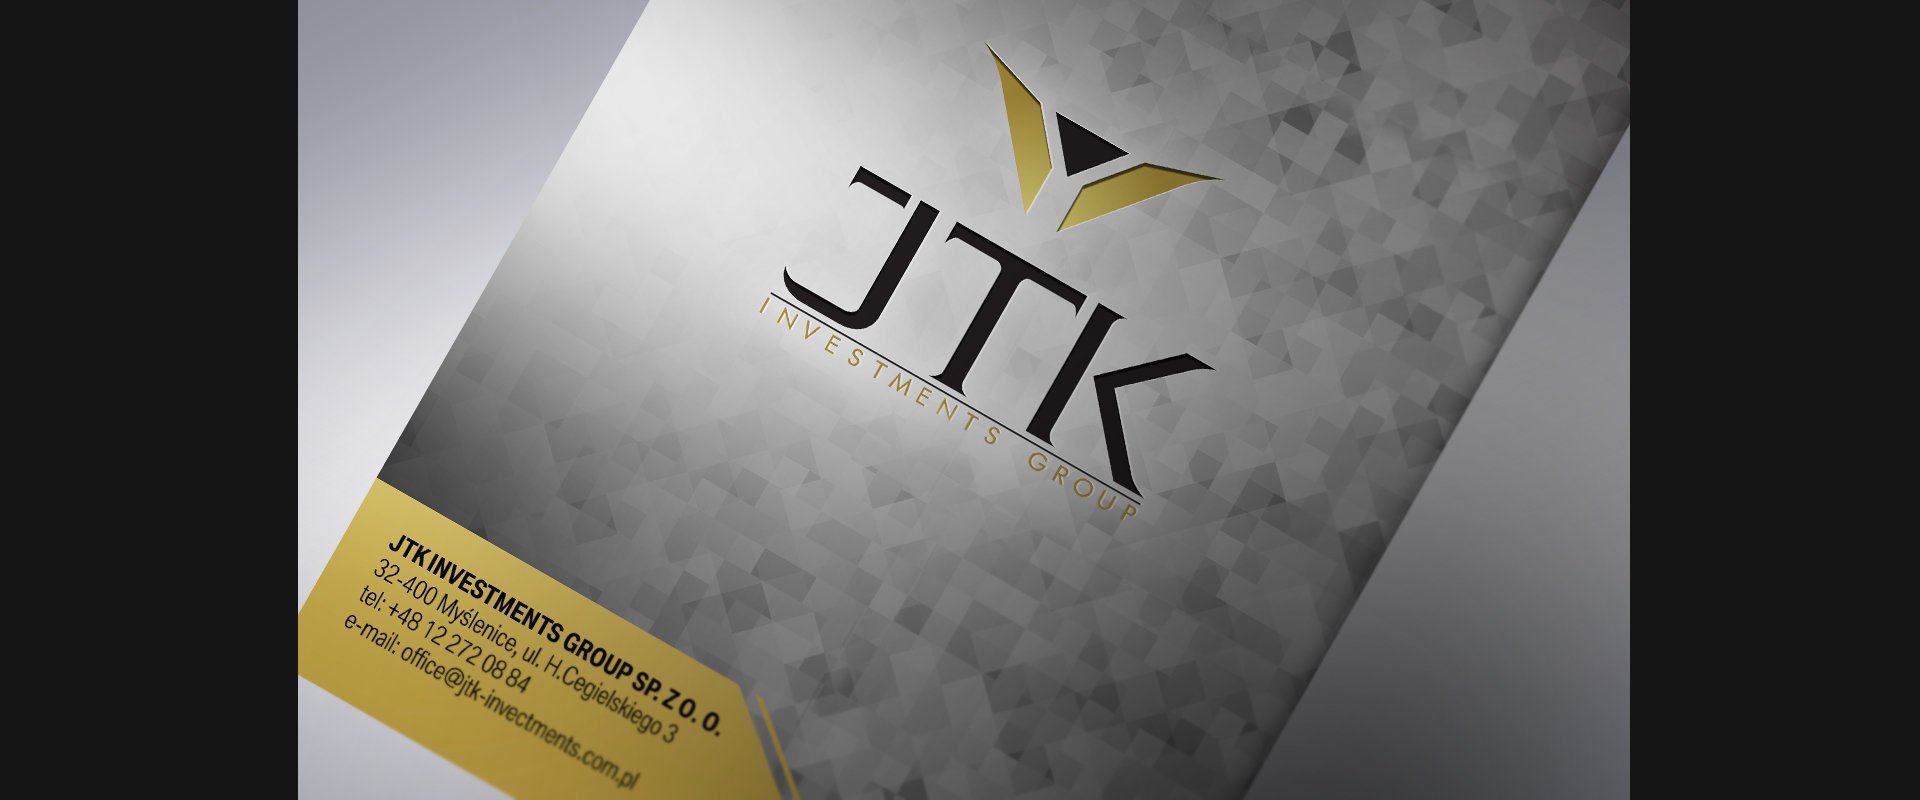 JTK Investments #6